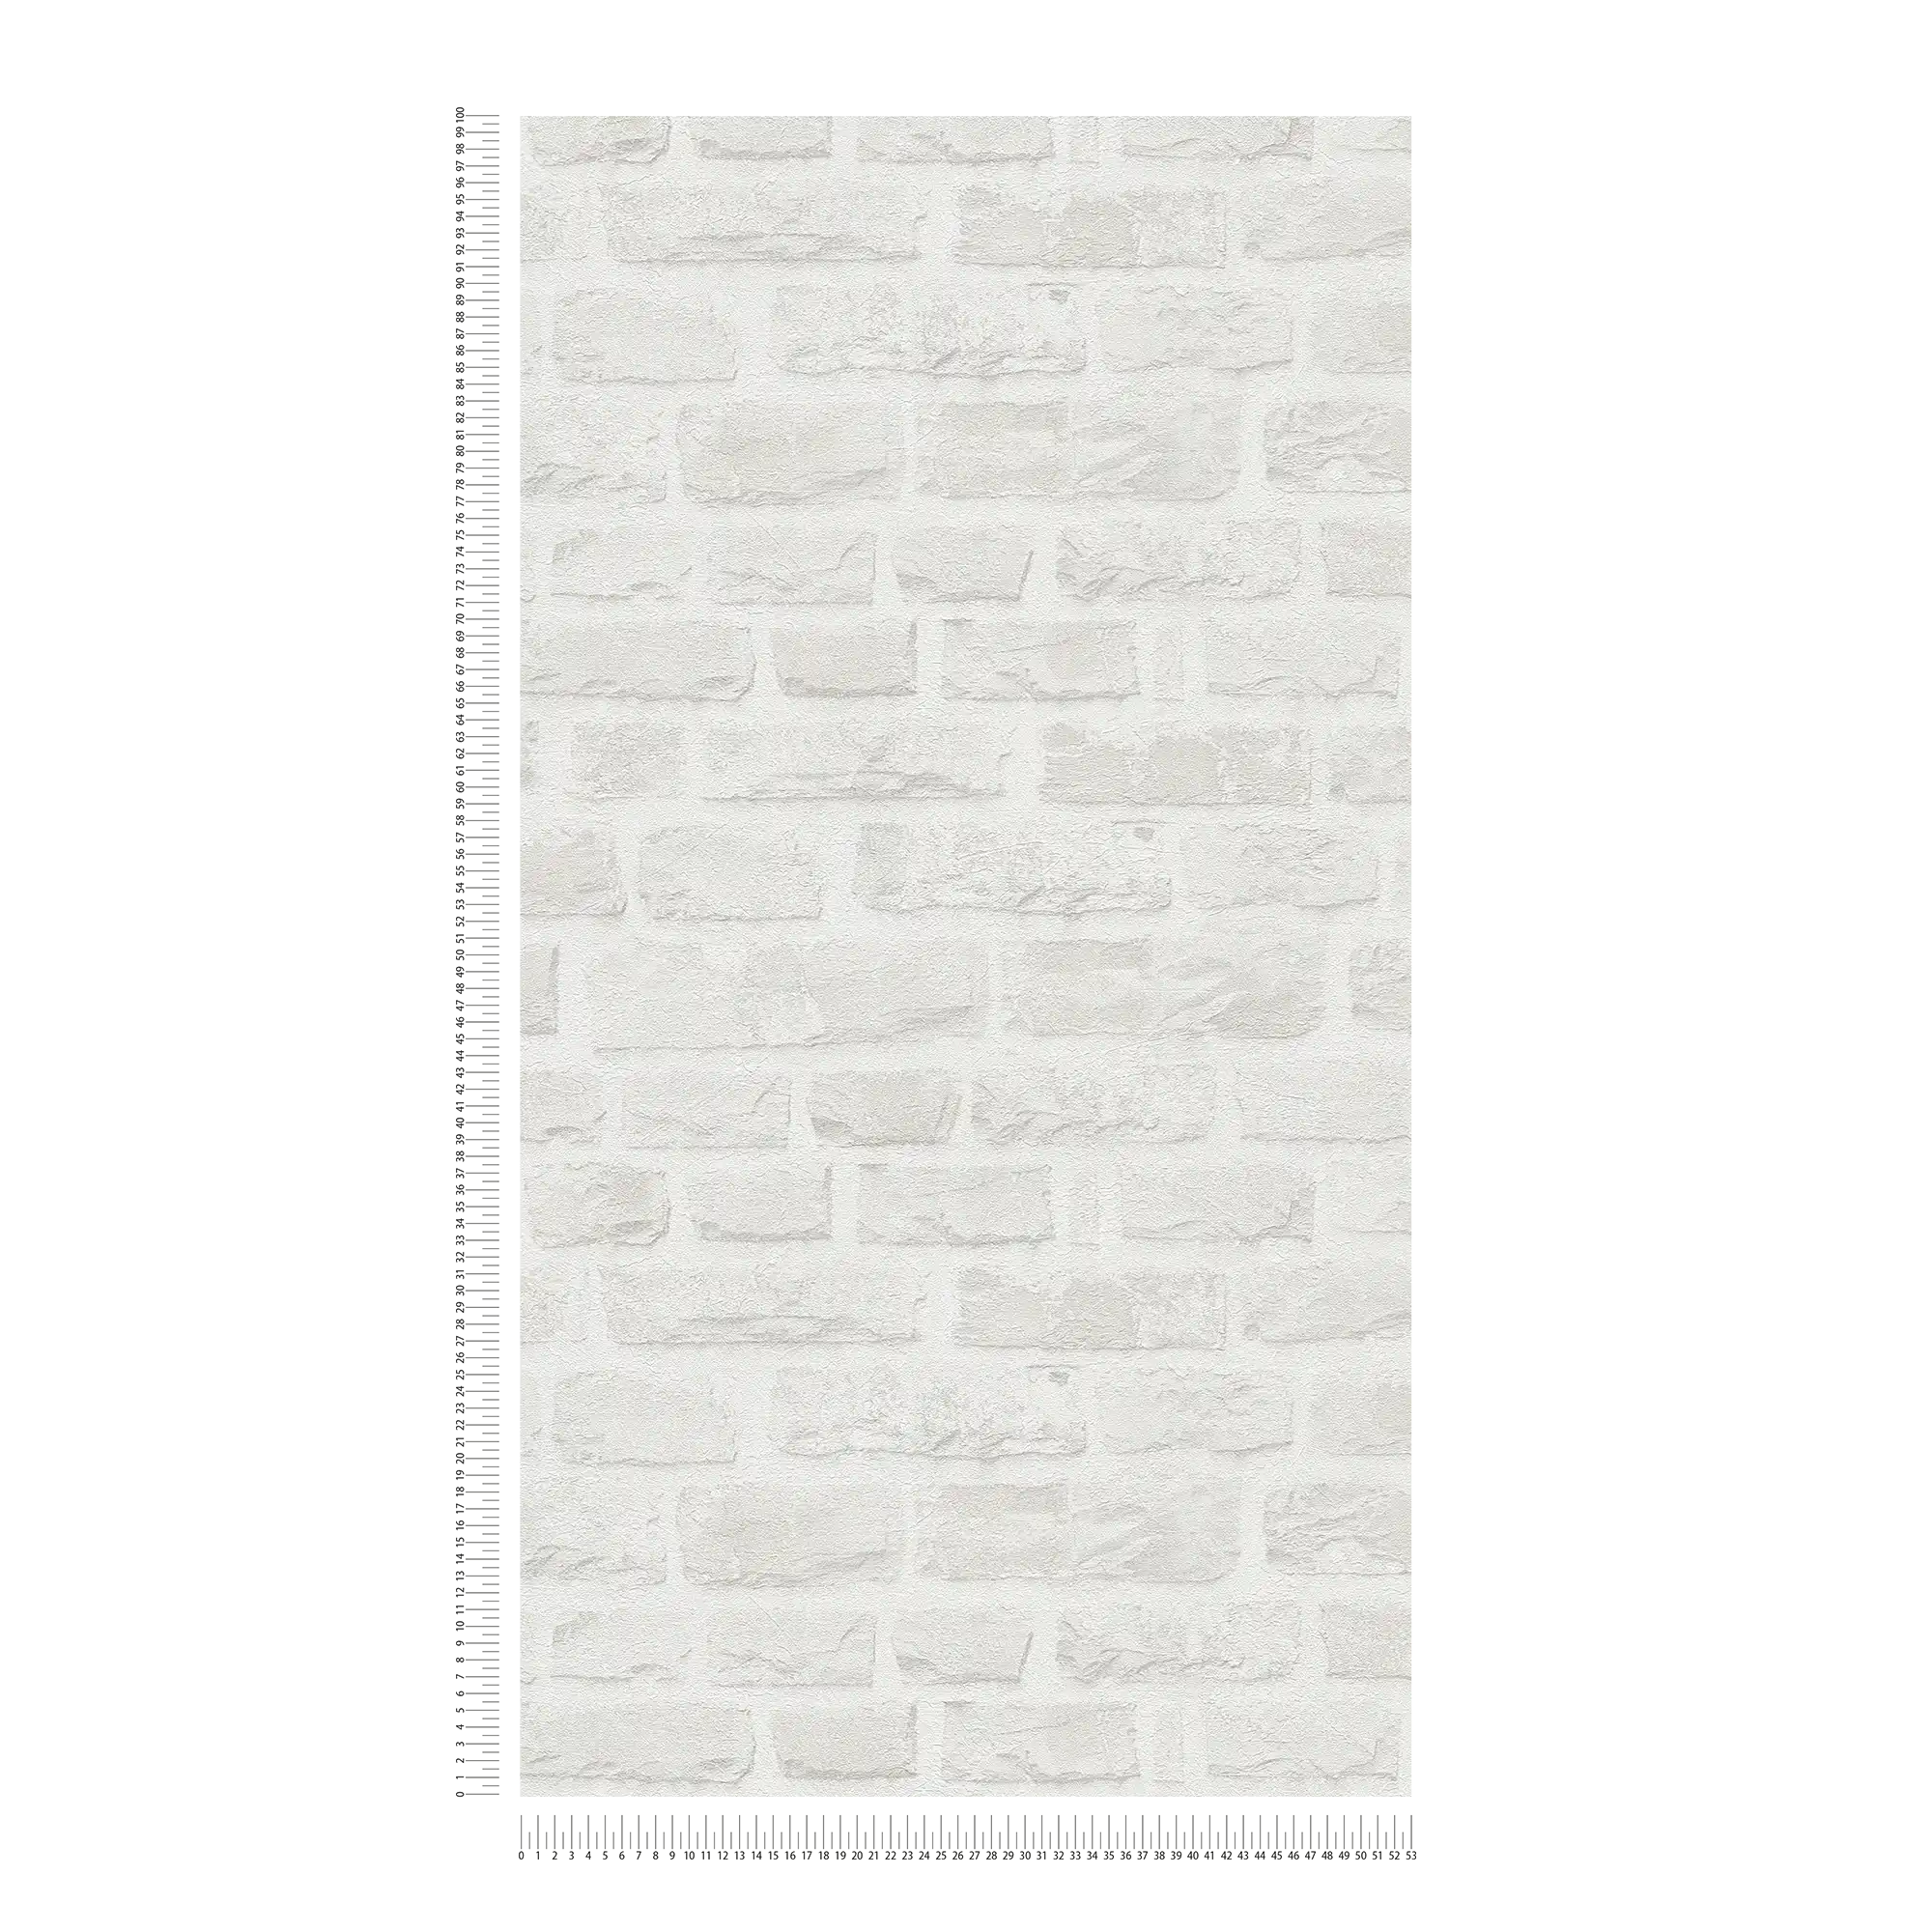             PVC-freie Steinoptik Vliestapete – Weiß, Grau
        